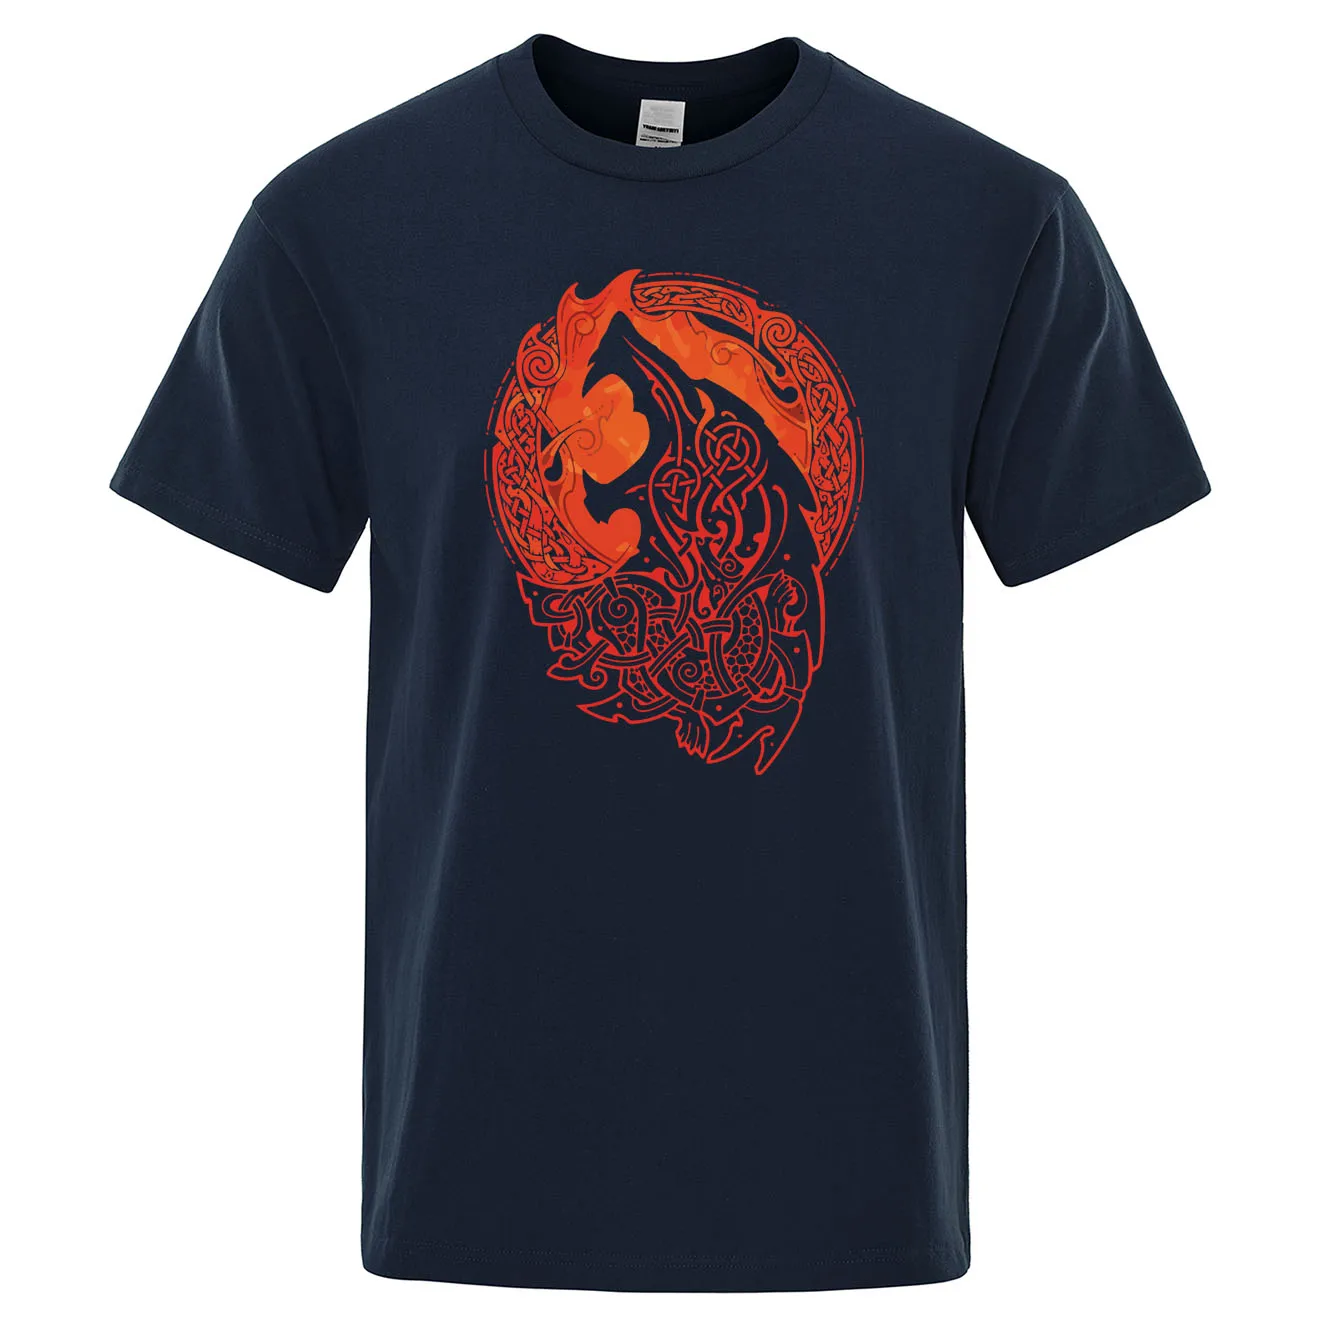 Norse Mythology Vikings Fenrir wolf футболка для мужчин, качественная хлопковая хипстерская футболка, хлопок, топы для отдыха, футболка с викингом - Цвет: dark blue 6